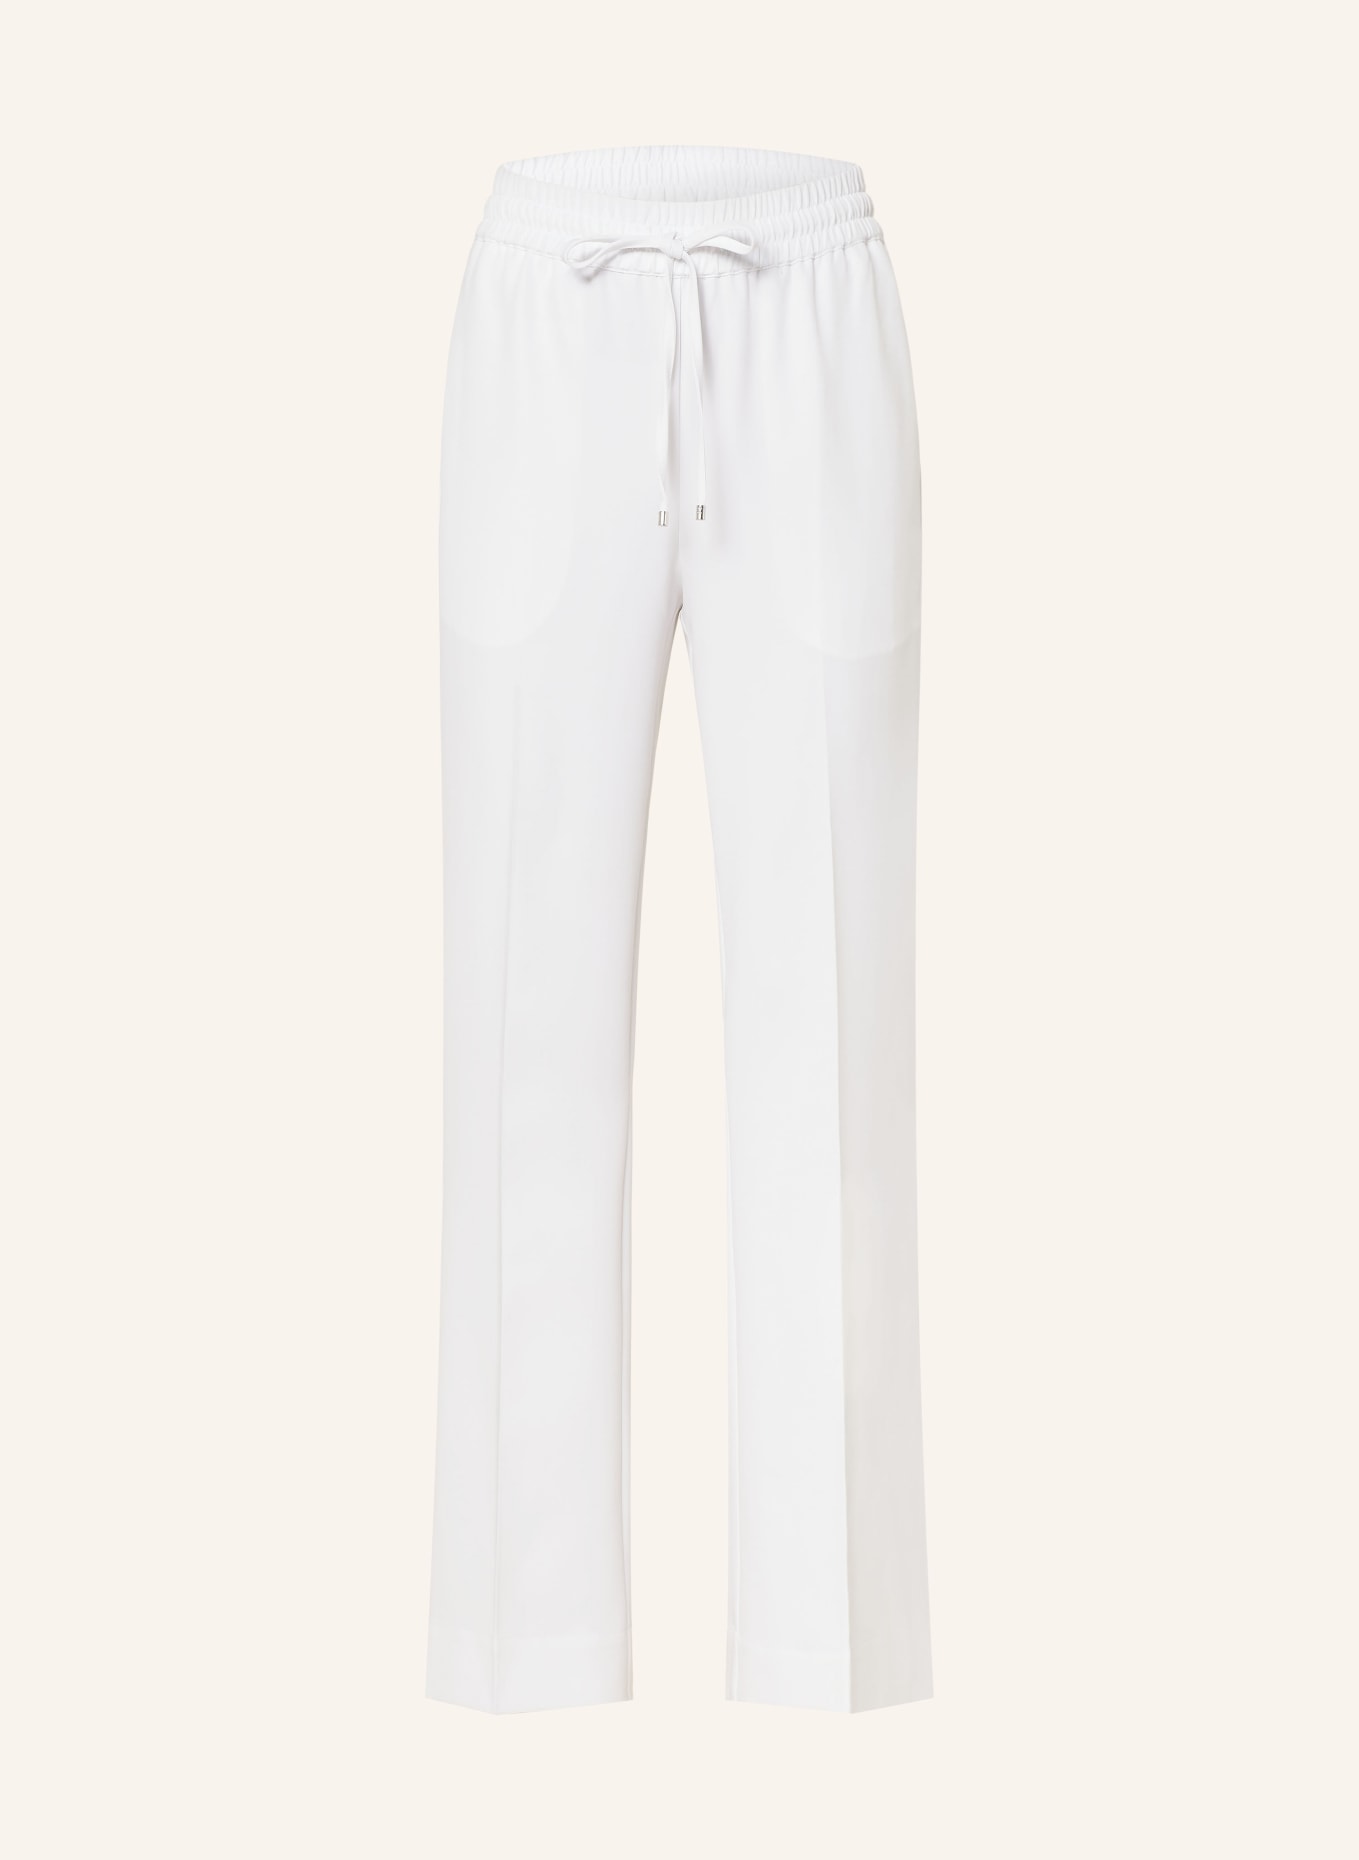 HERZEN'S ANGELEGENHEIT Pants in jogger style, Color: WHITE (Image 1)